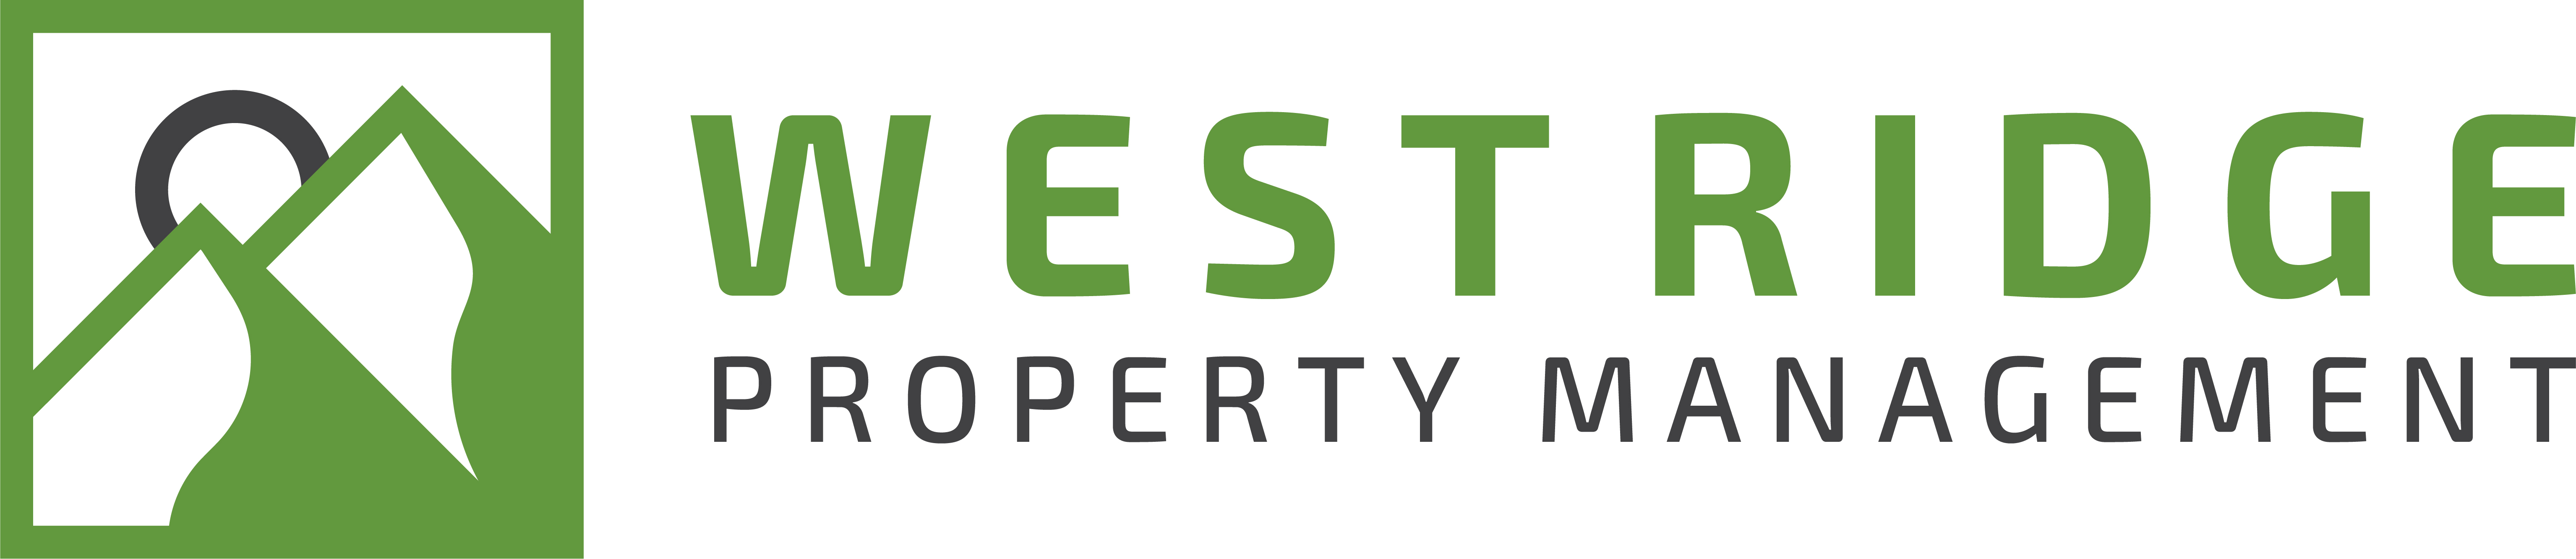 West Ridge Property Management